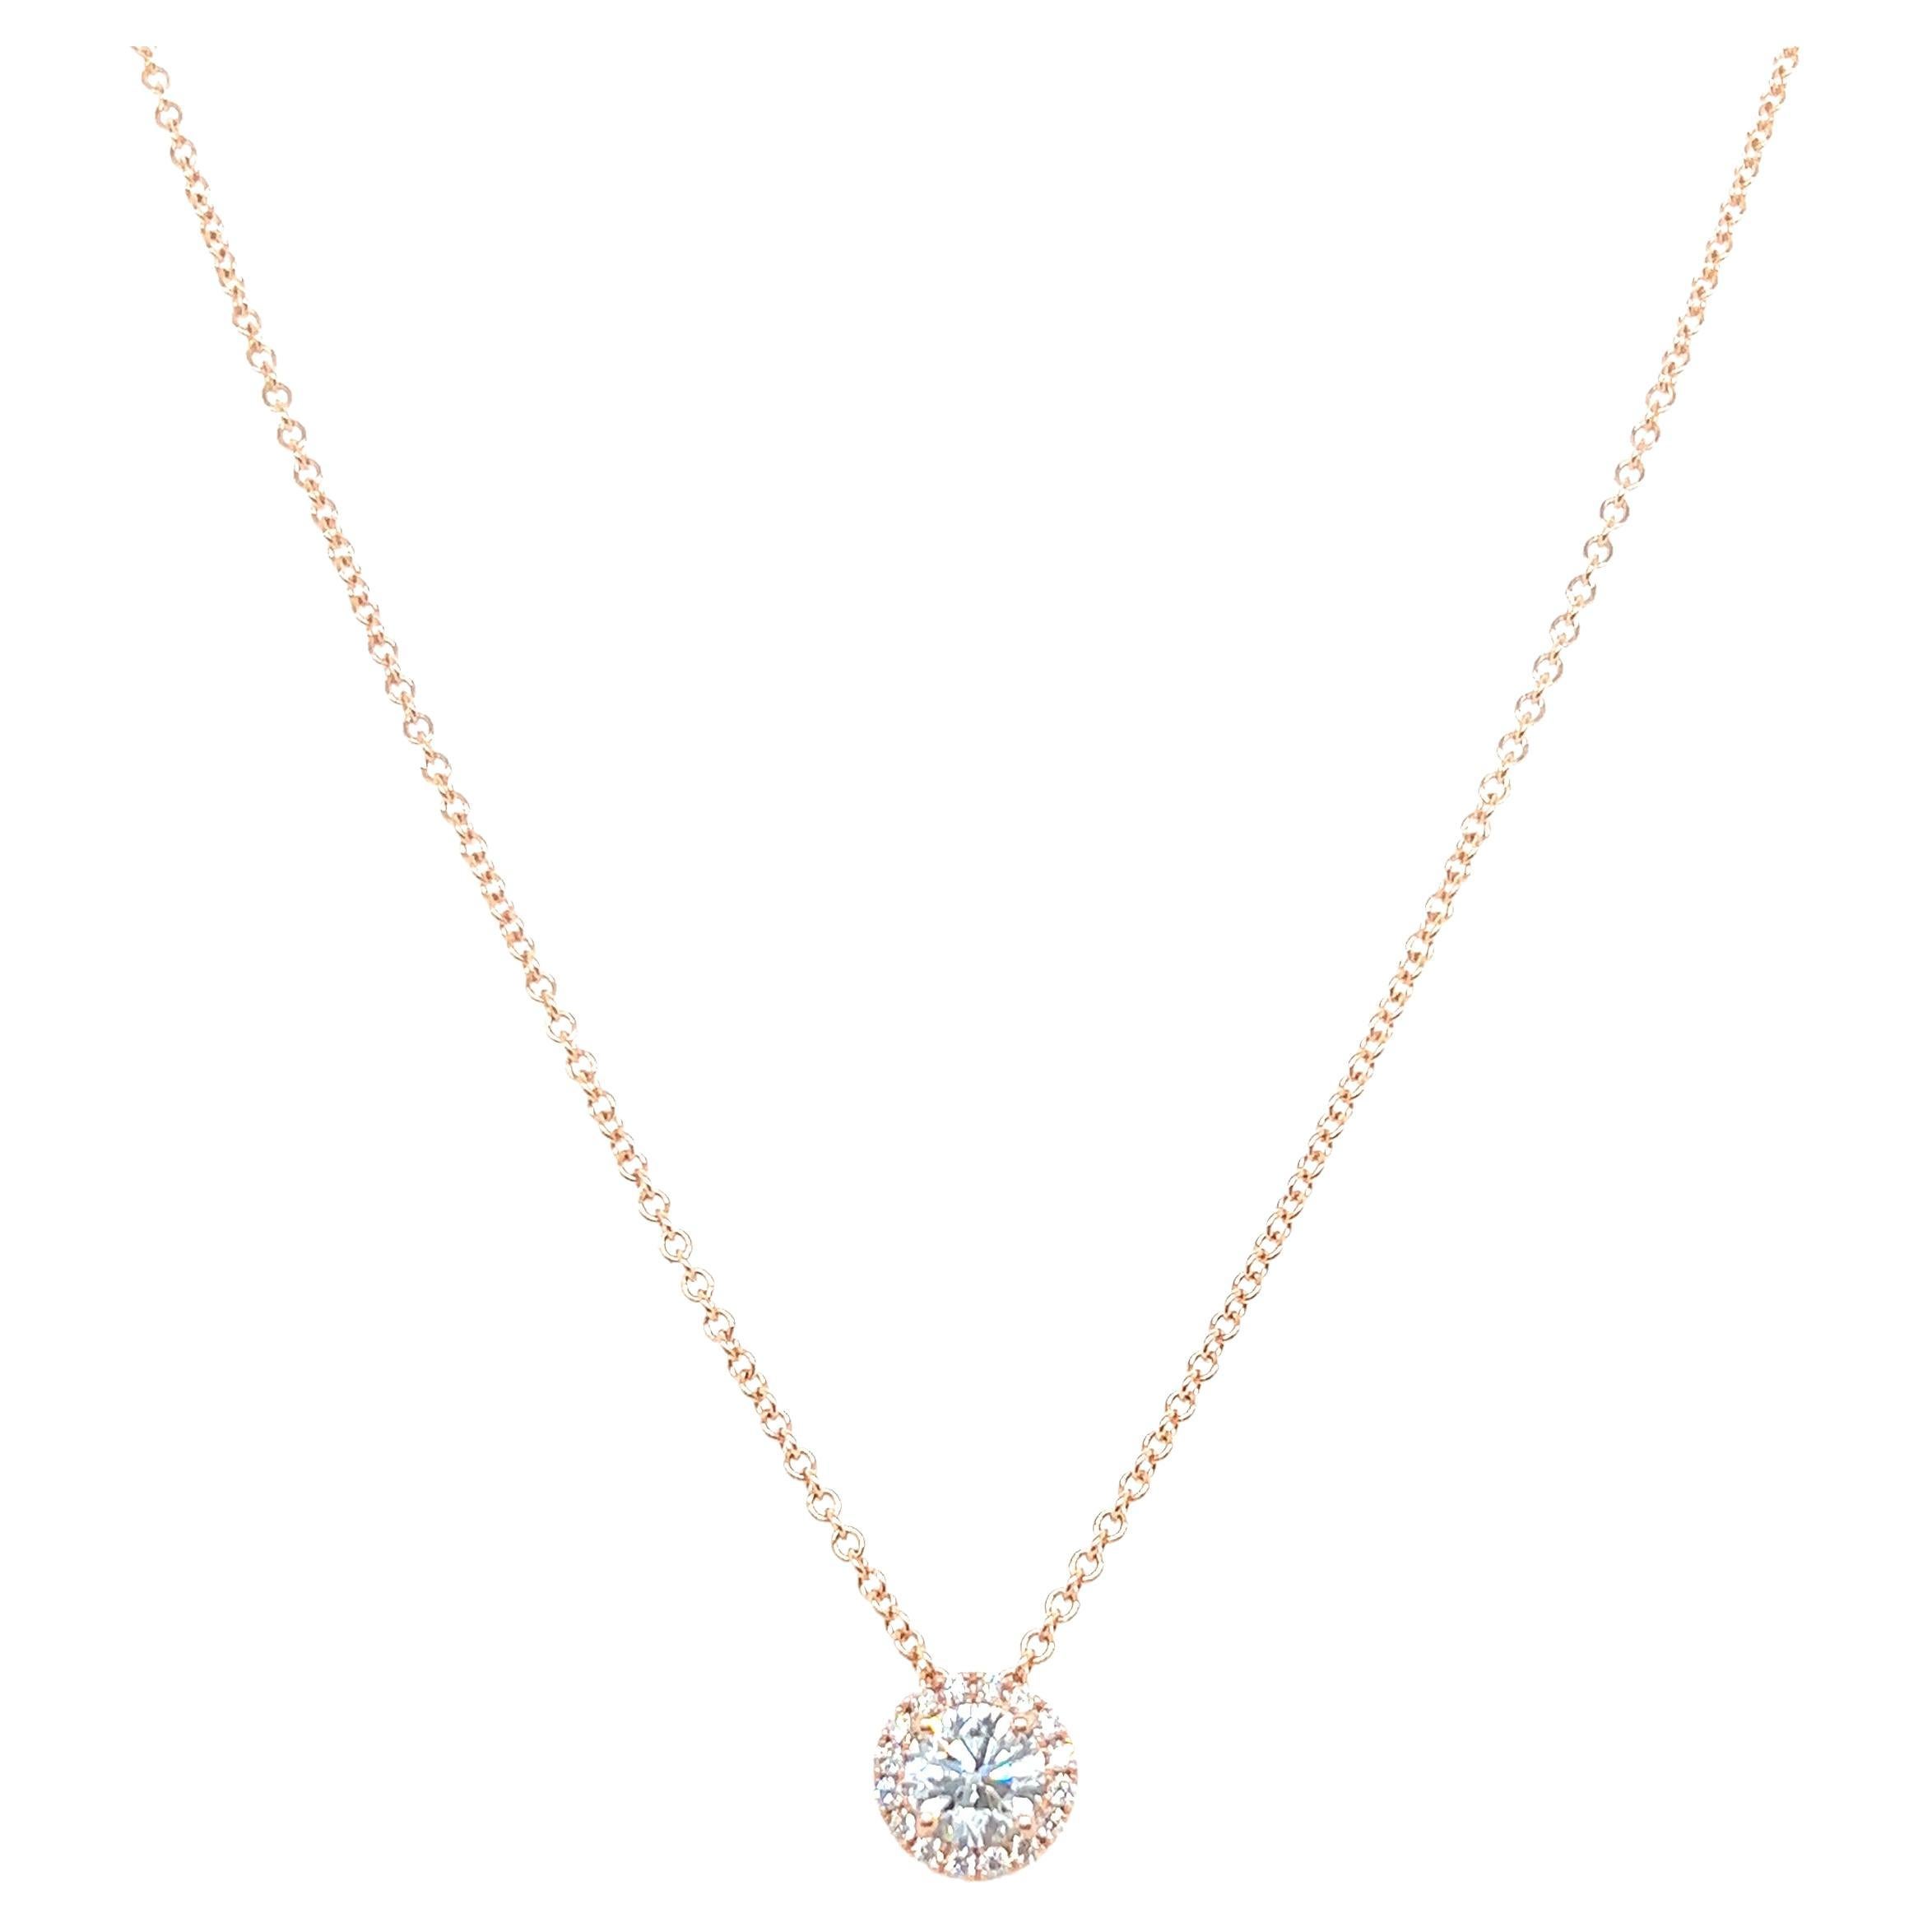 14k White Gold 1.10 Carat Round Cut Diamond Solitaire Pendant Necklace